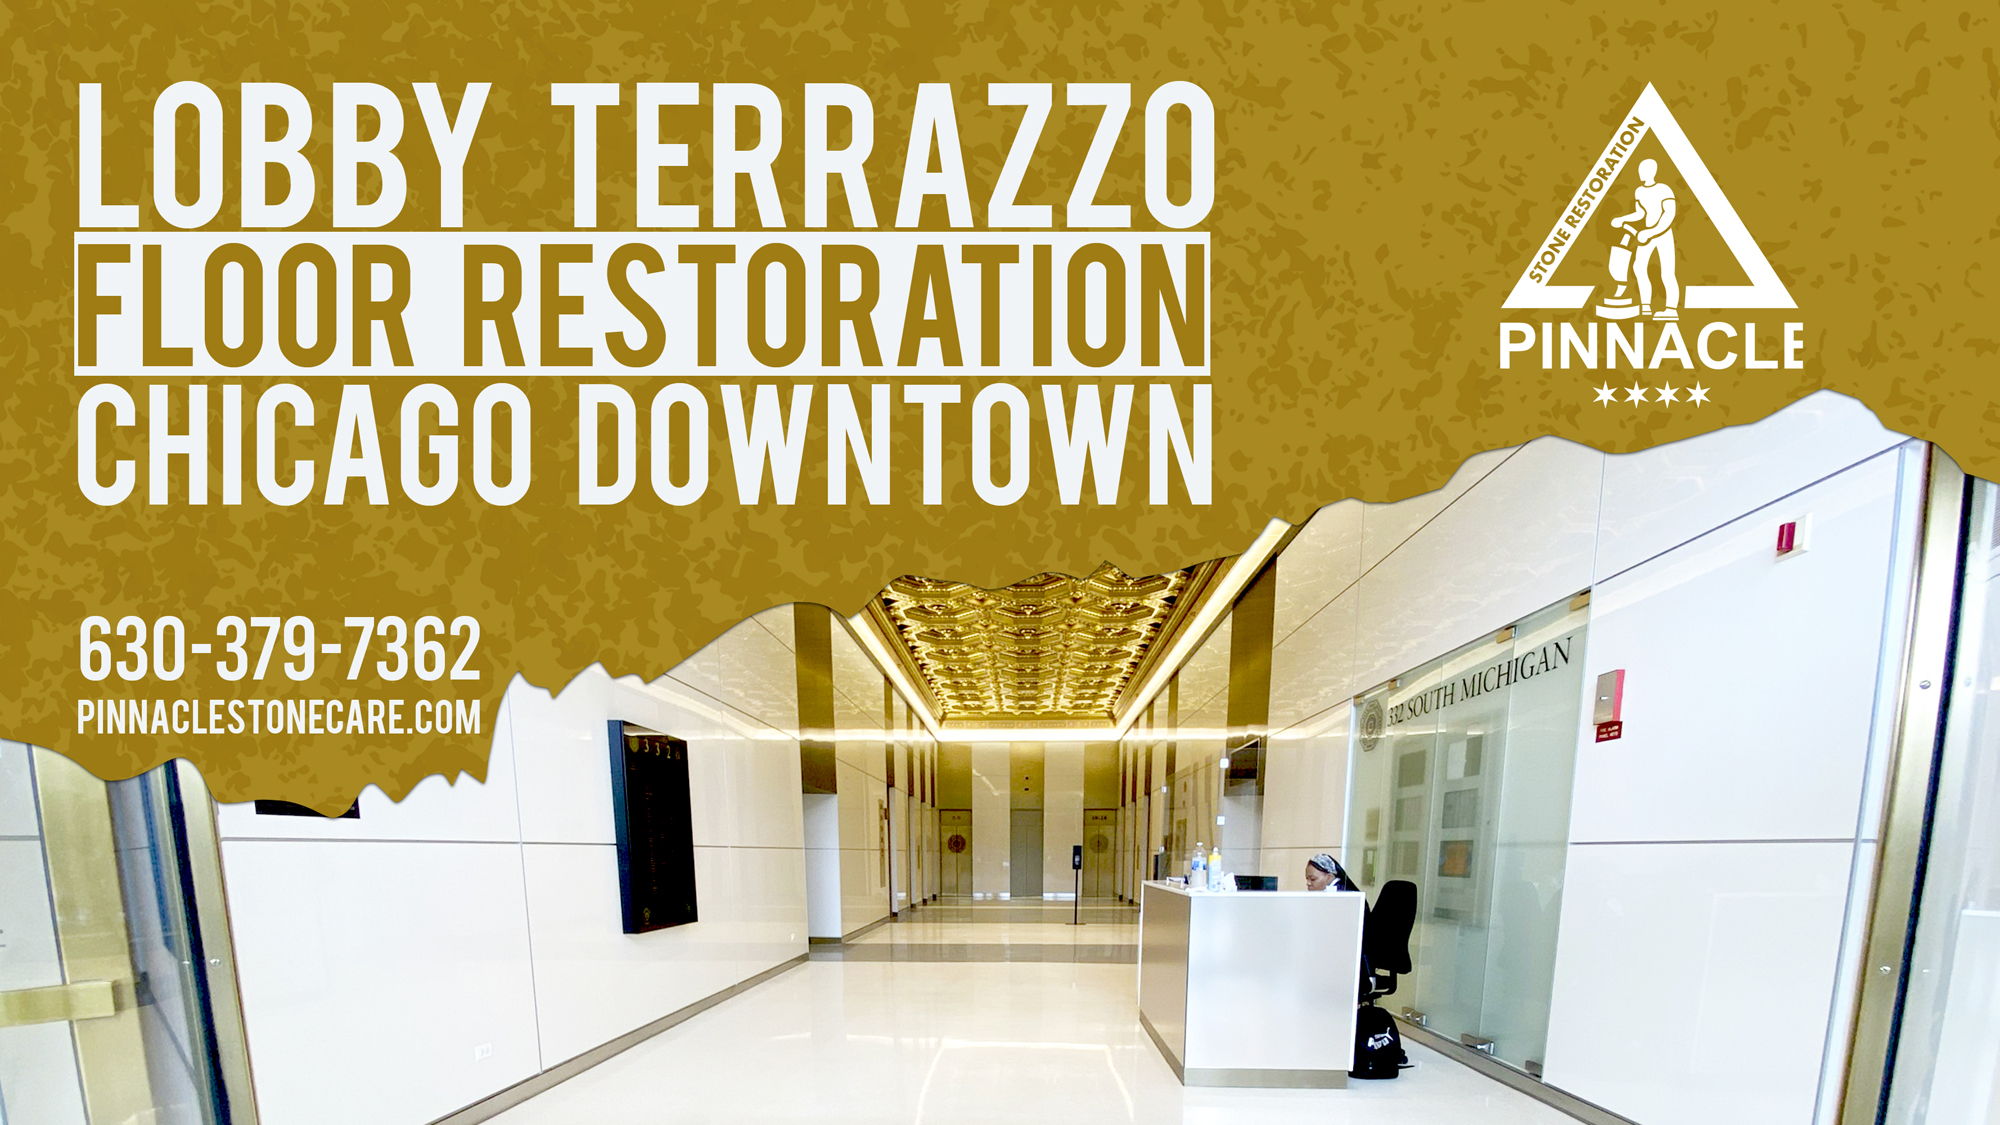 Lobby Terrazzo Floor Restoration in Chicago Downtown – terrazzo crack repair, polishing, sealing